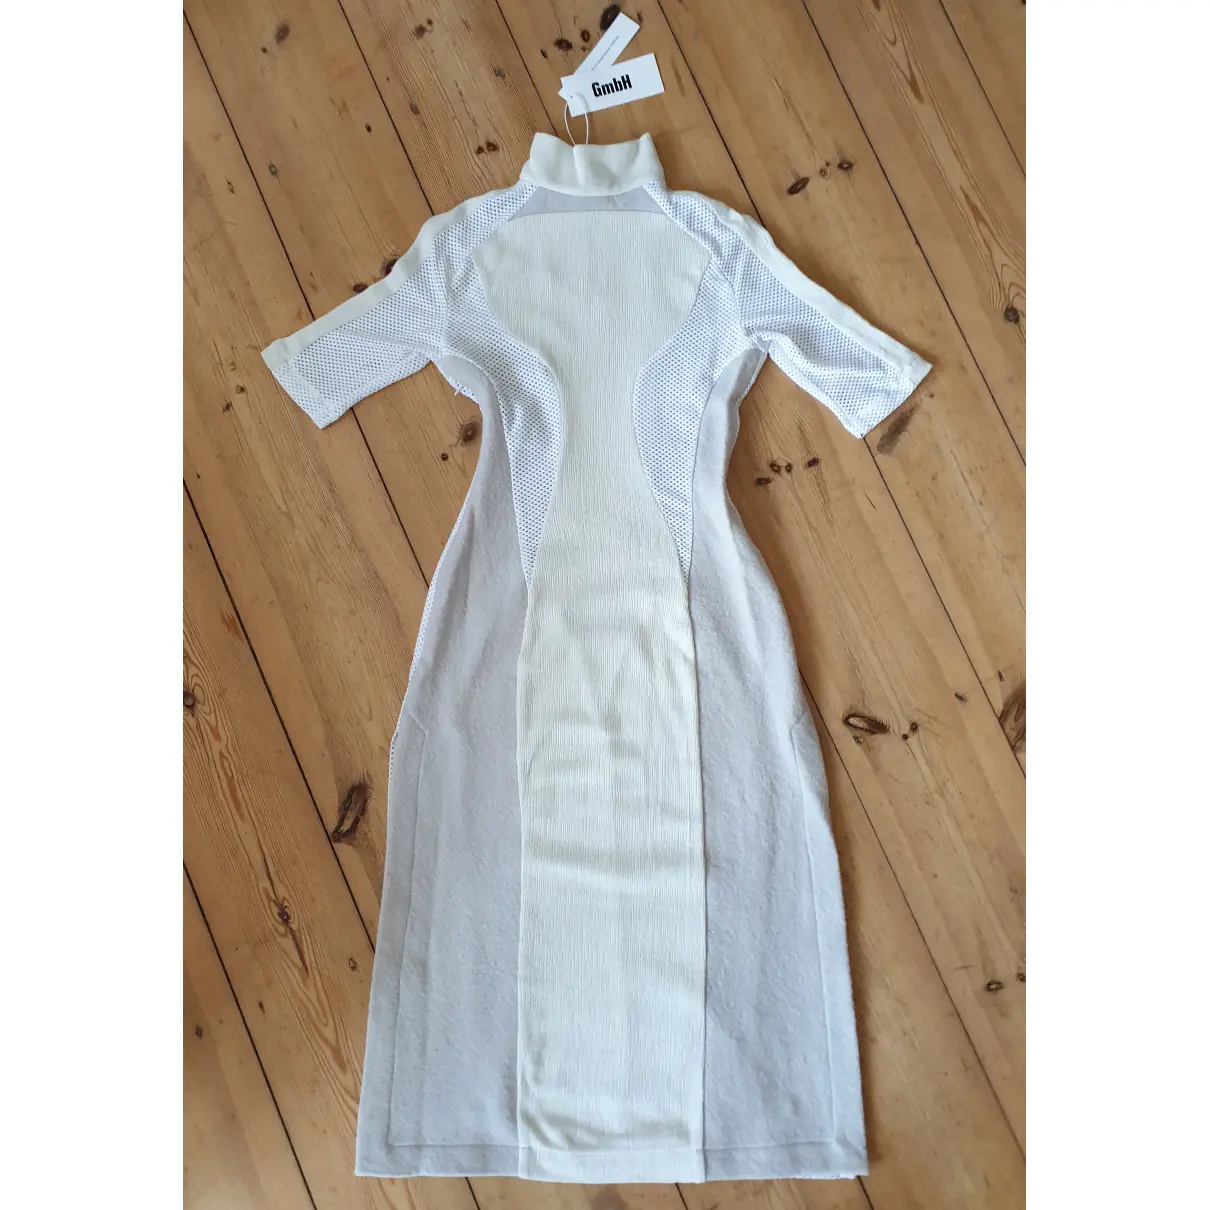 Buy Gmbh Wool mid-length dress online